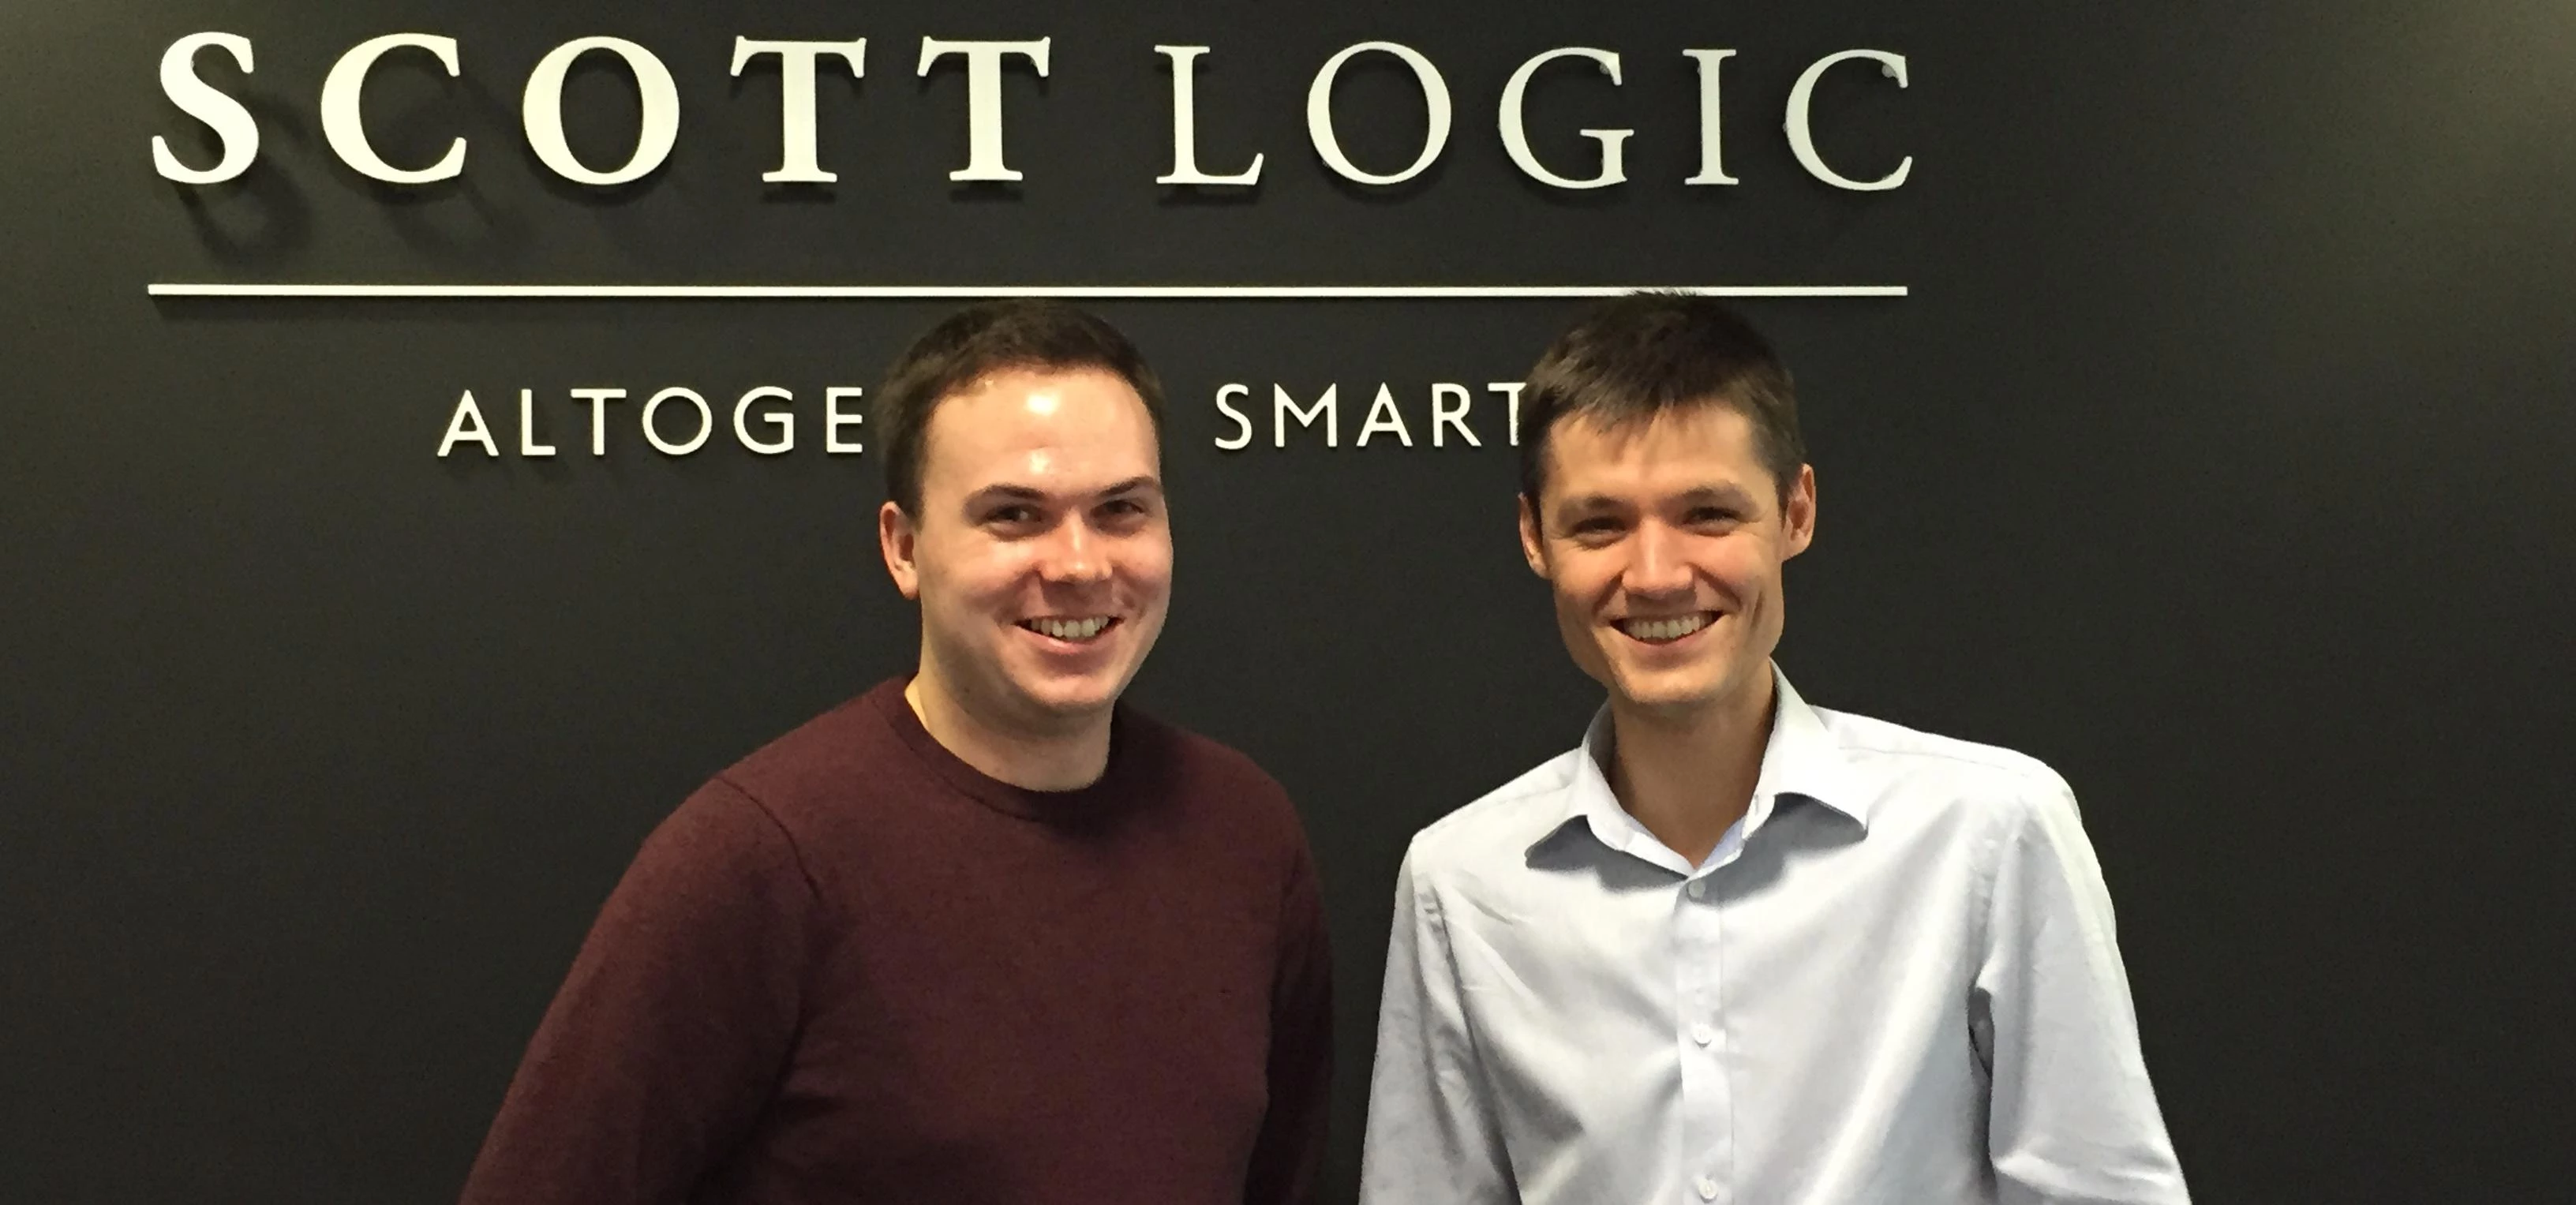 l-r Luke Smith, a senior developer, and his referee Jack Arnstein, a graduate test engineer at Scott